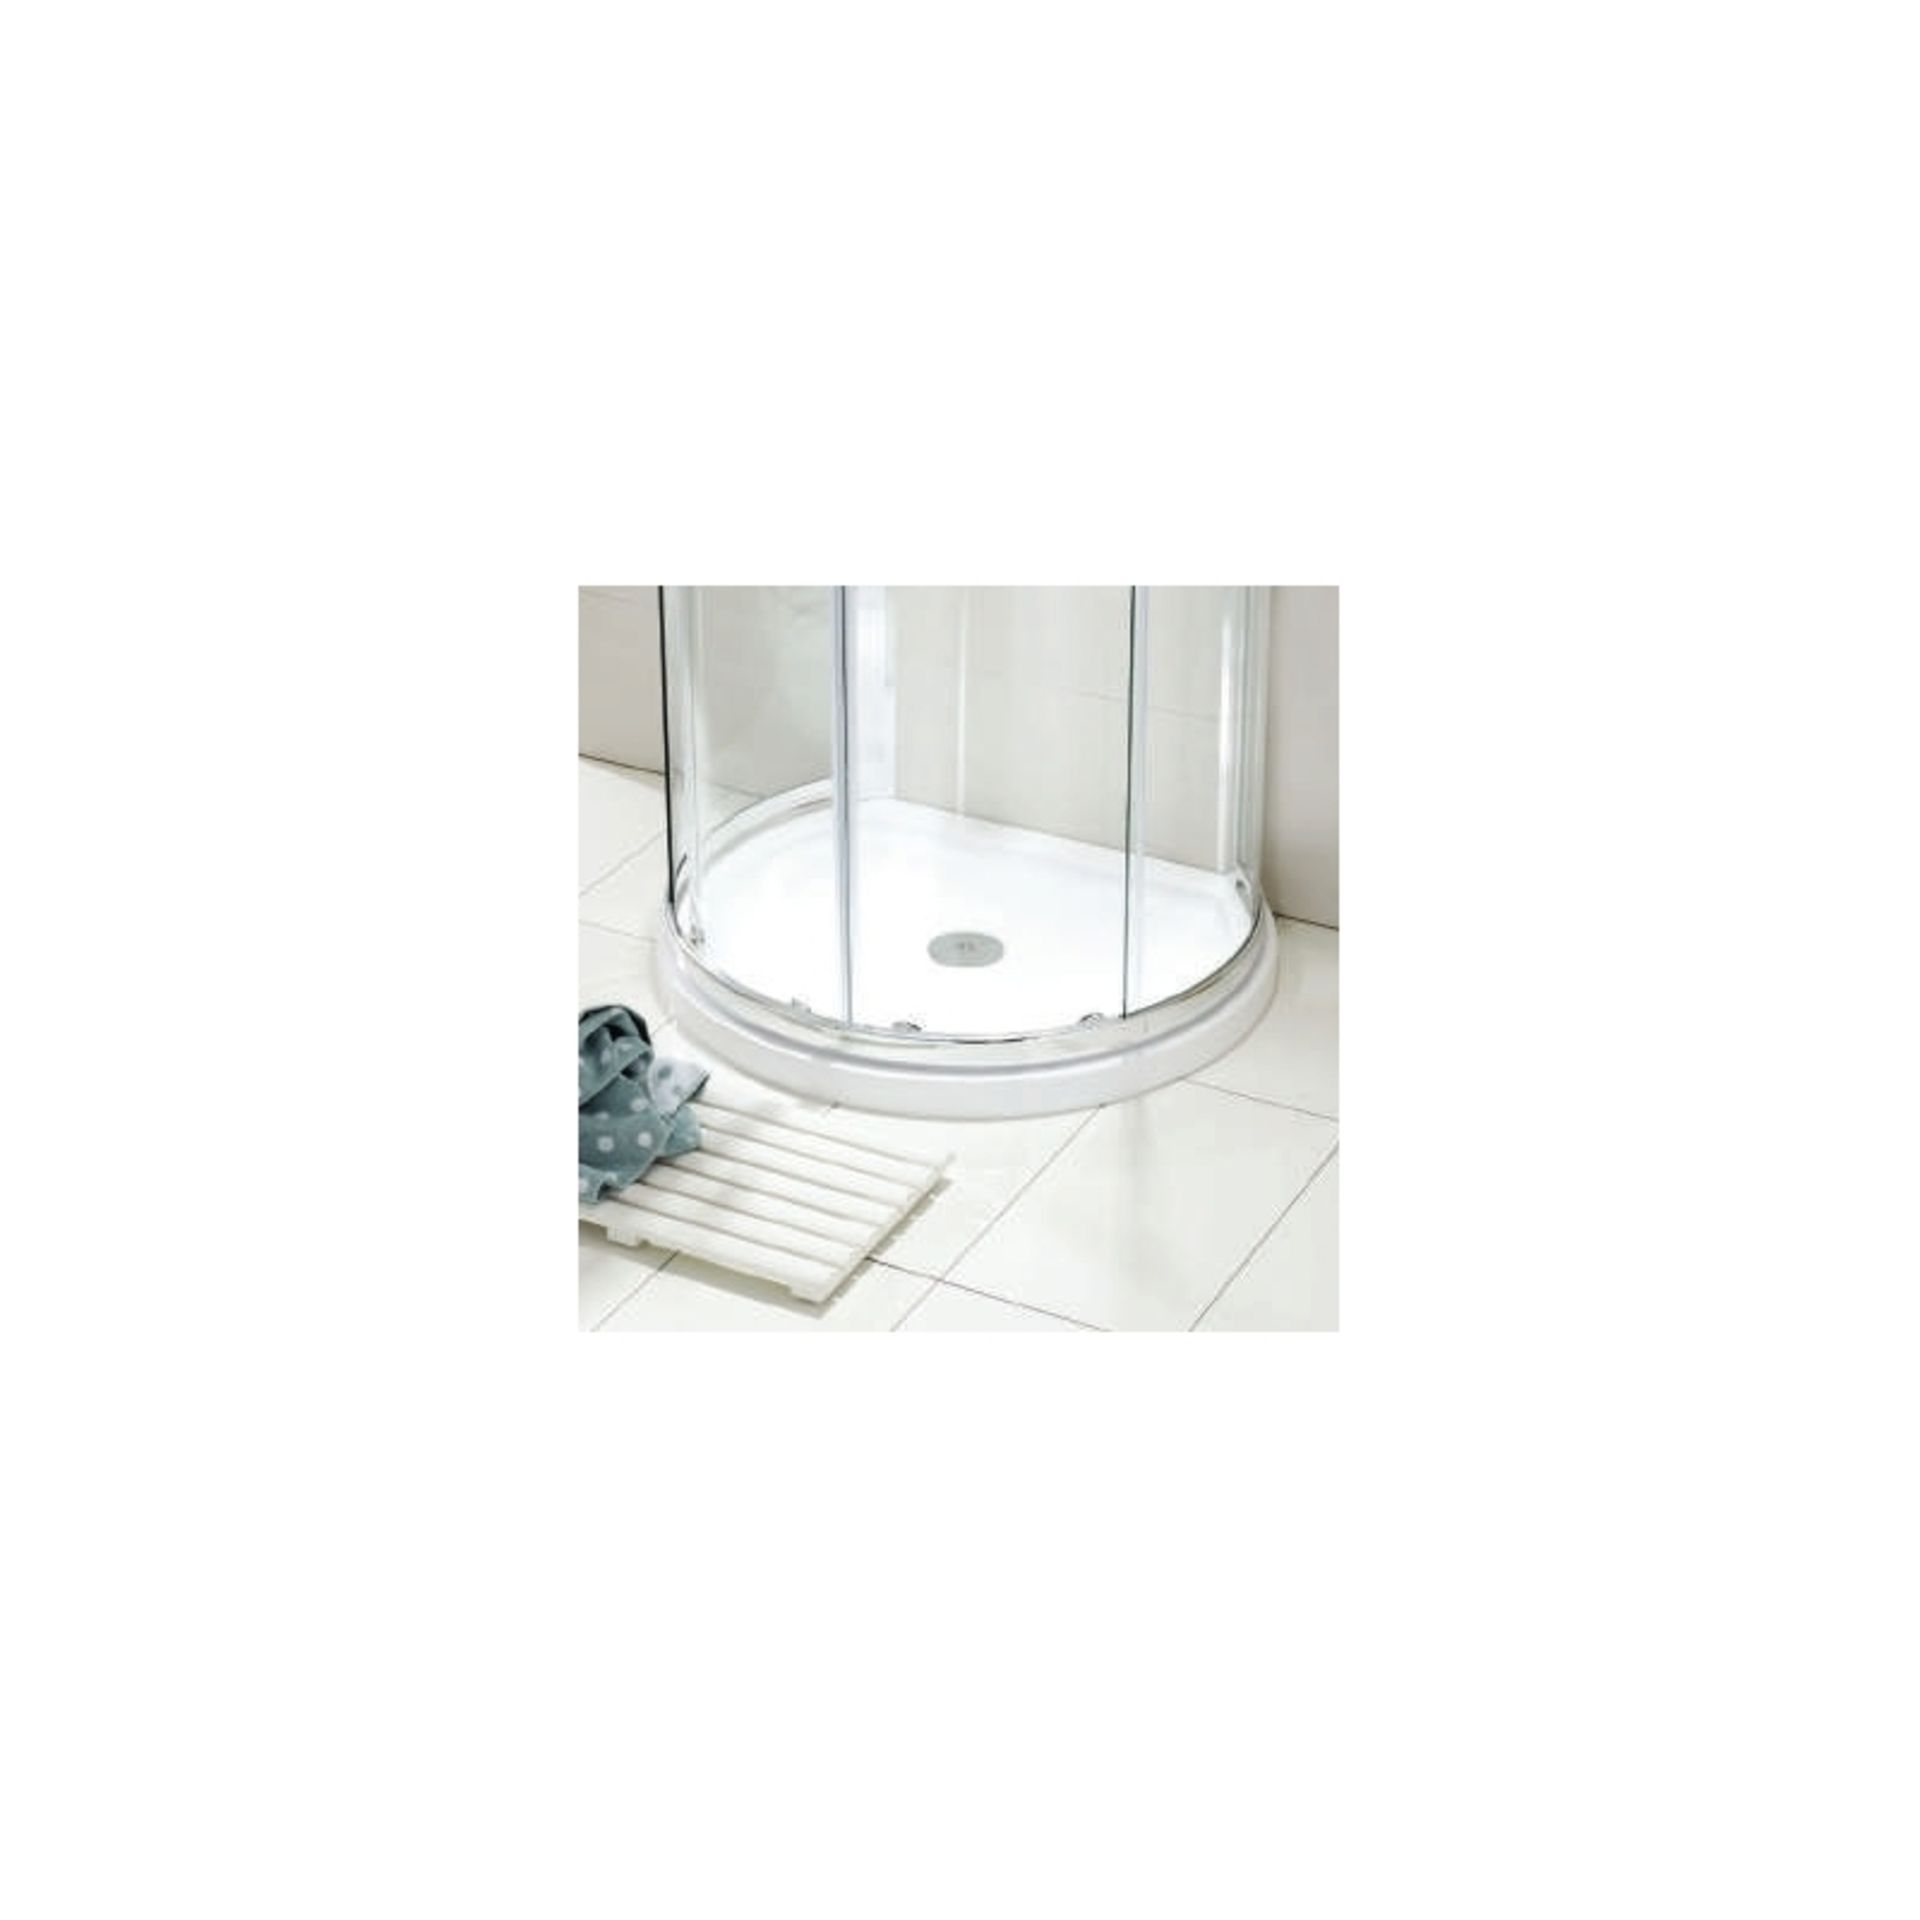 (PC41) Twyfords 770mm Hydro D Shape White Shower tray. Low profile ultra slim design Gel coate...(